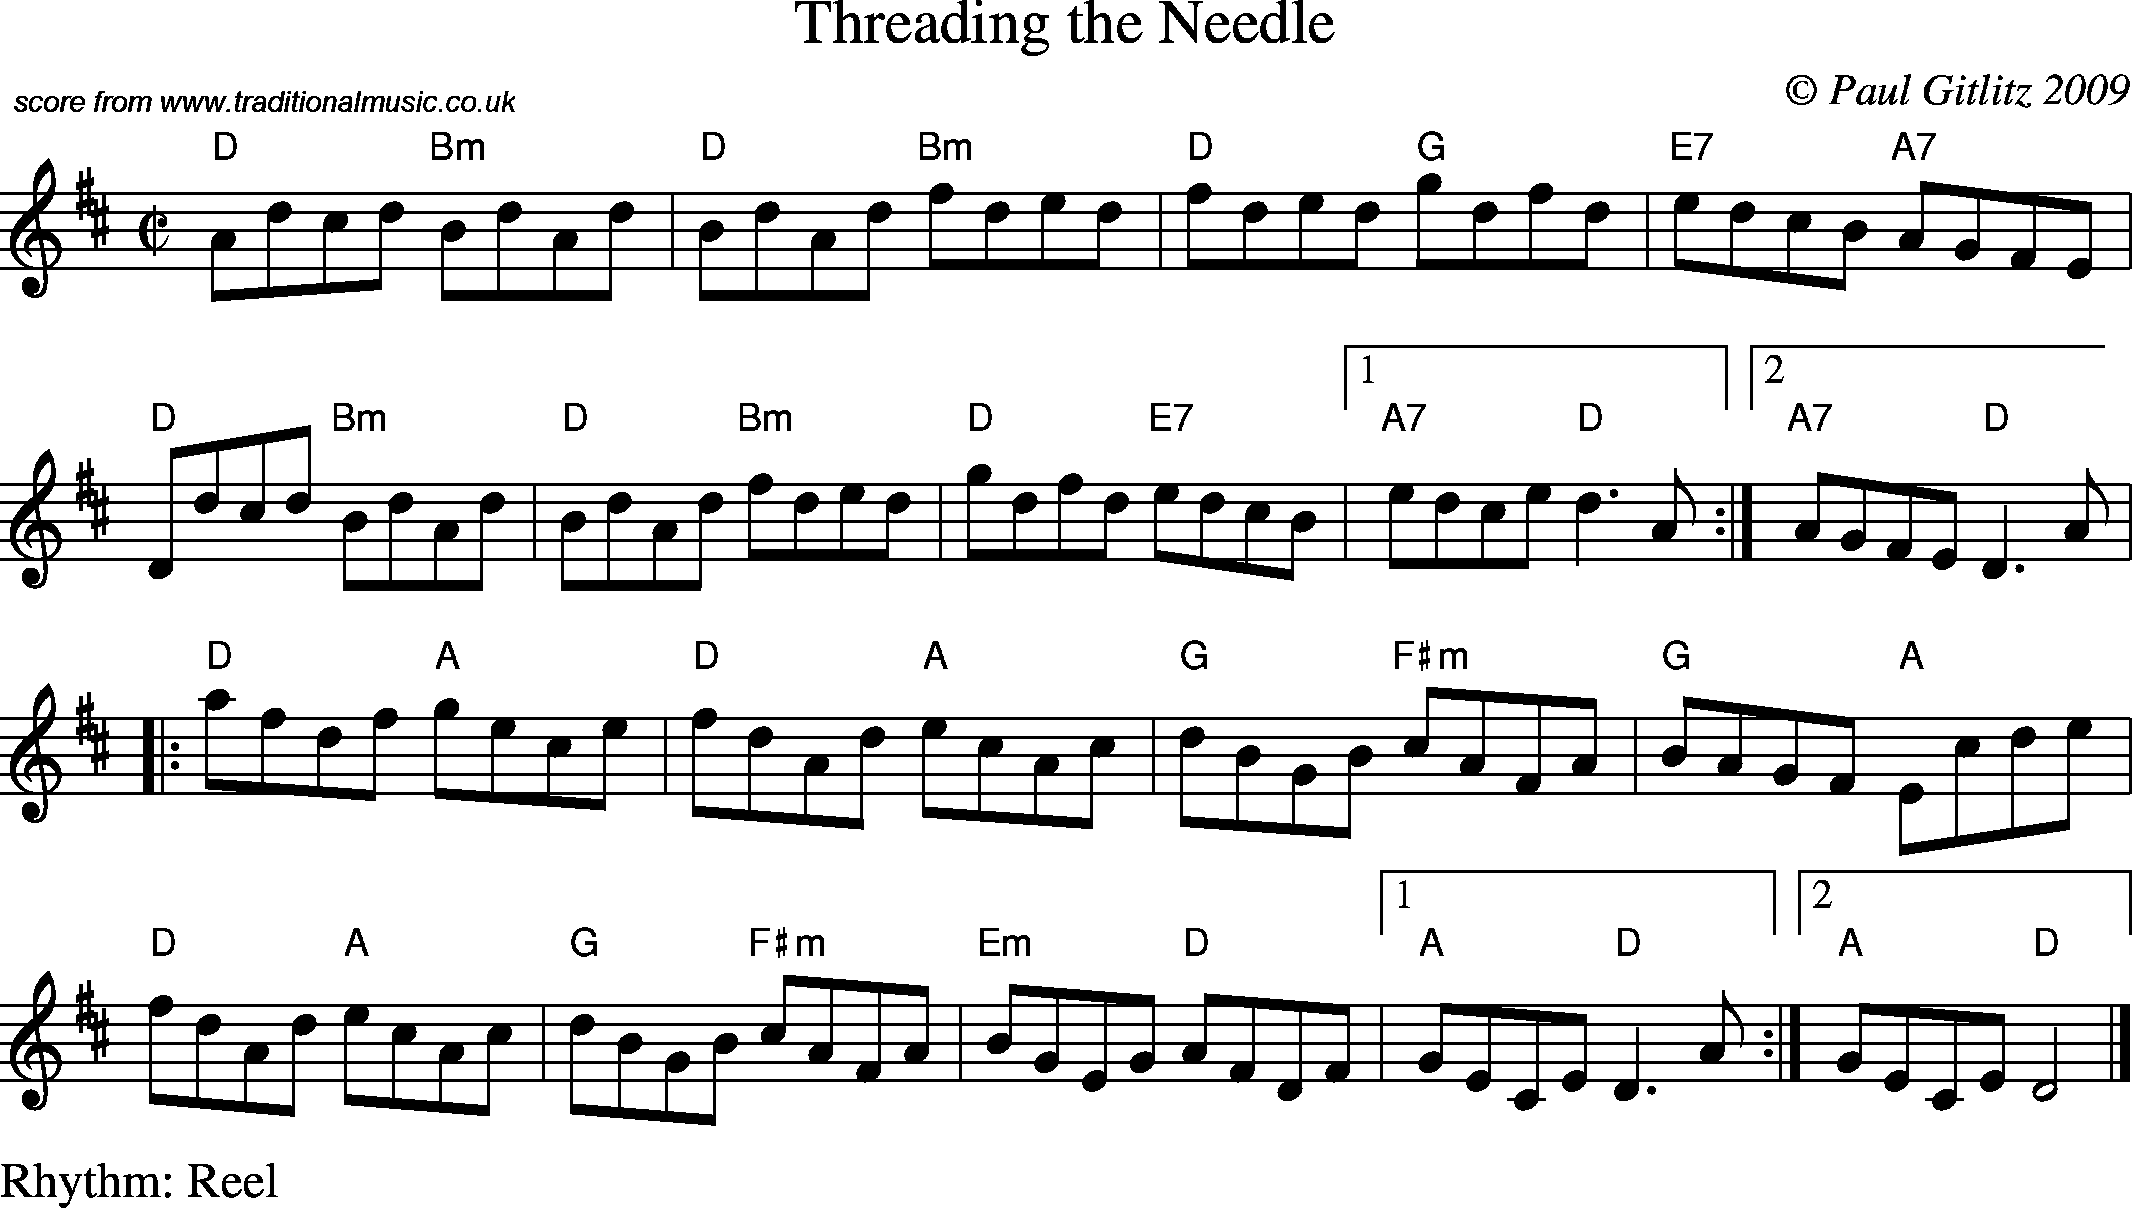 Sheet Music Score for Reel - Threading the Needle